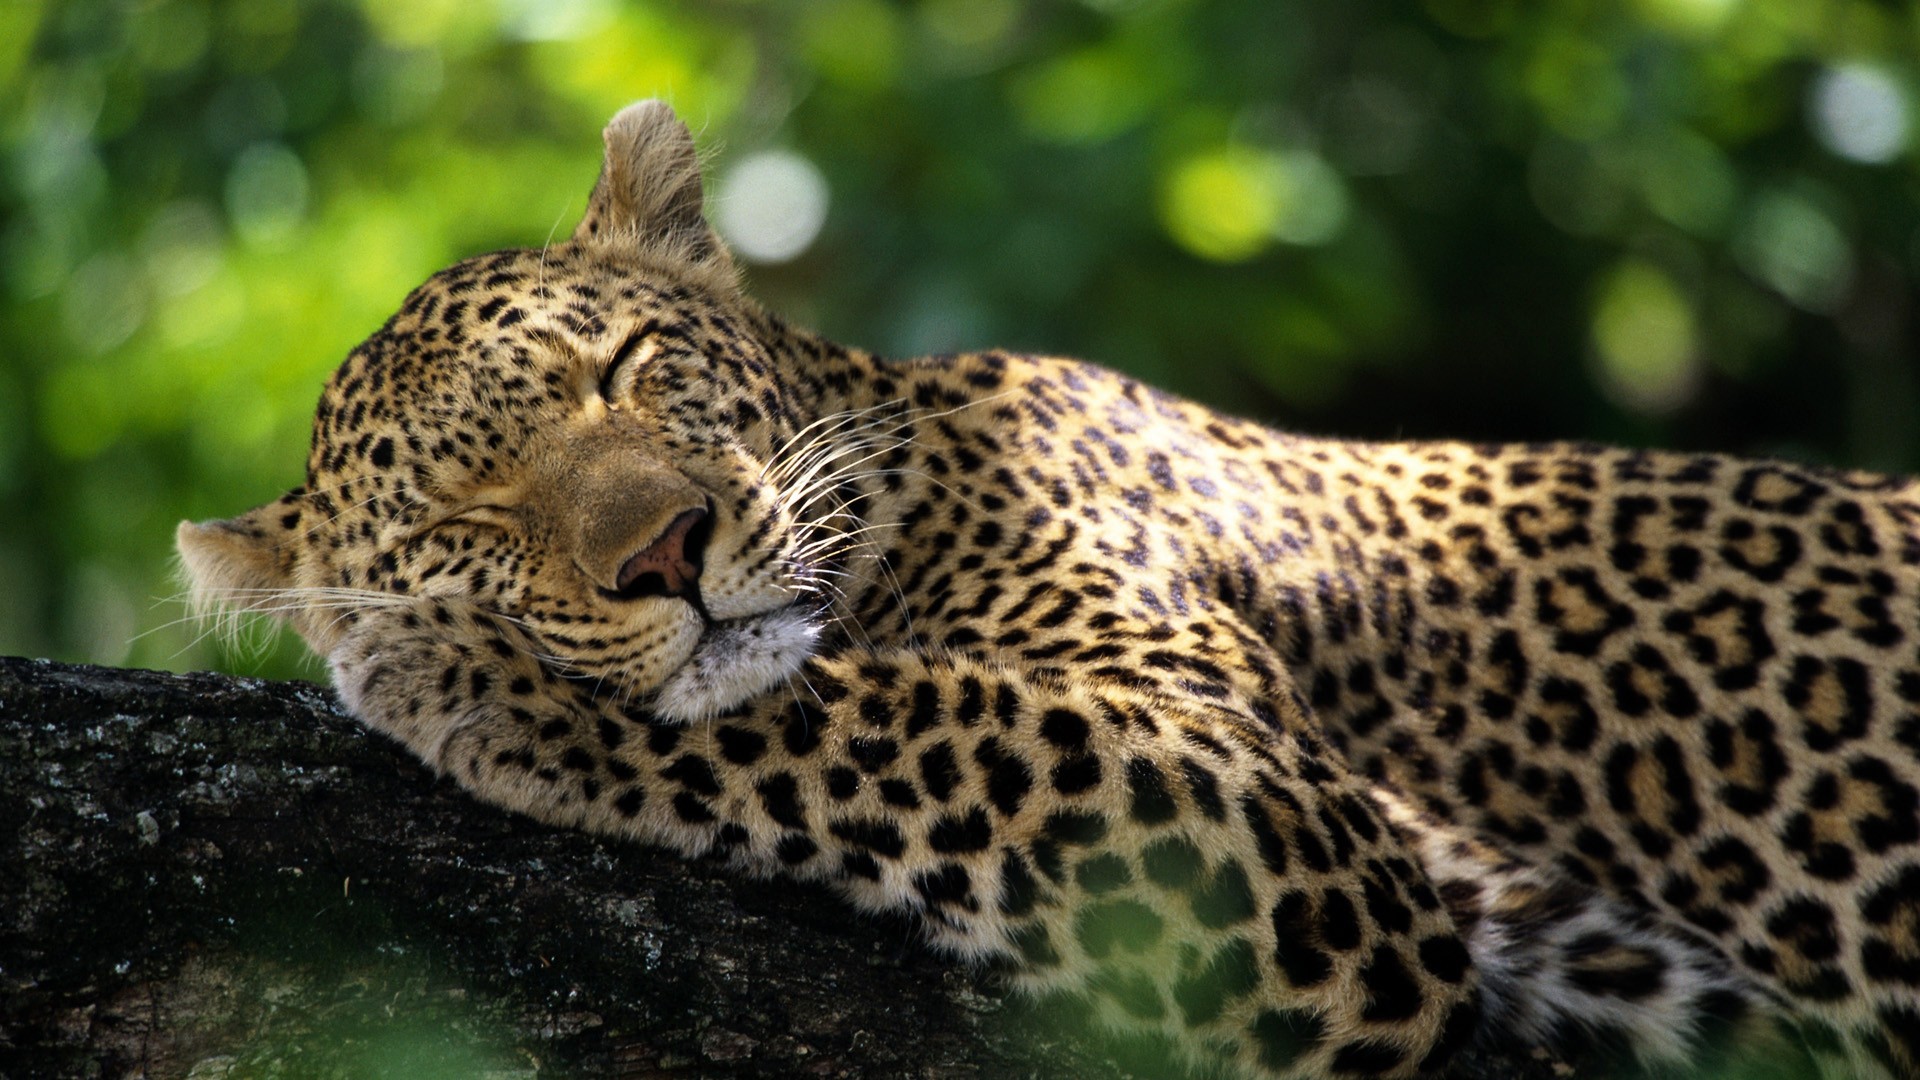 General 1920x1080 sleeping bokeh wildlife nature leopard animals mammals green background big cats relaxing